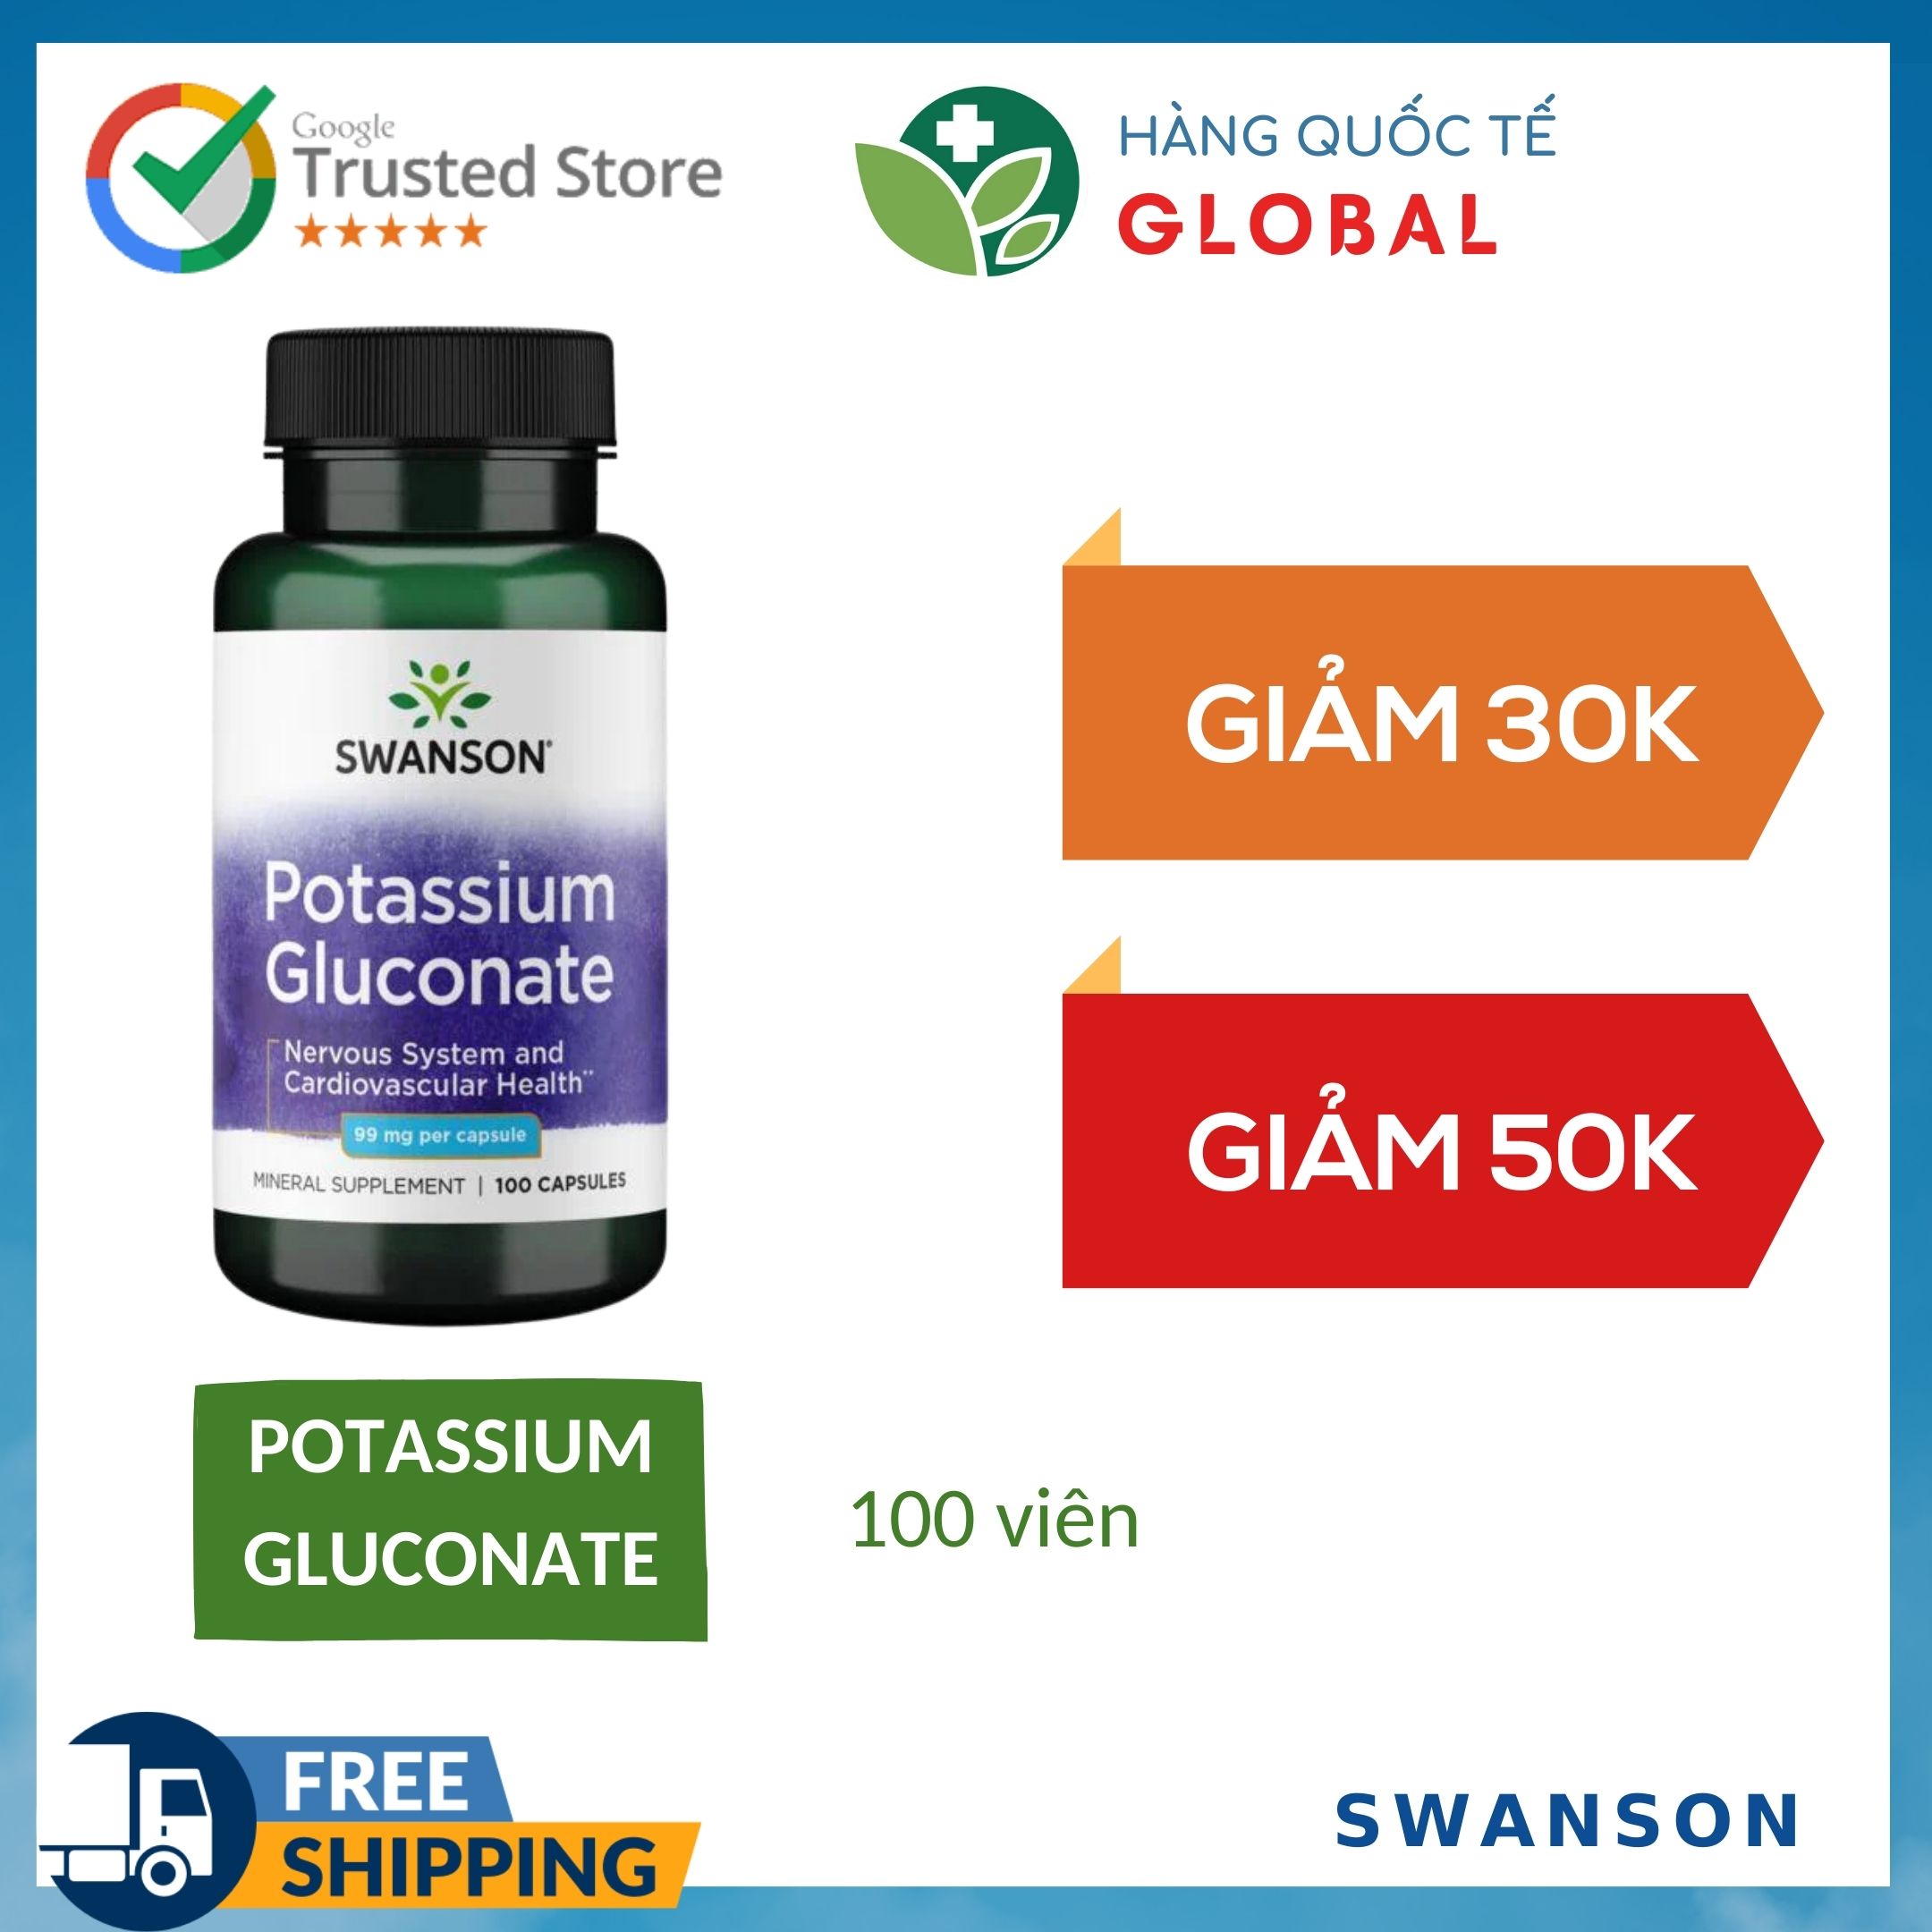 SWANSON POTASSIUM GLUCONATE, 100 viên, Hỗ trợ sức khỏe tim mạch